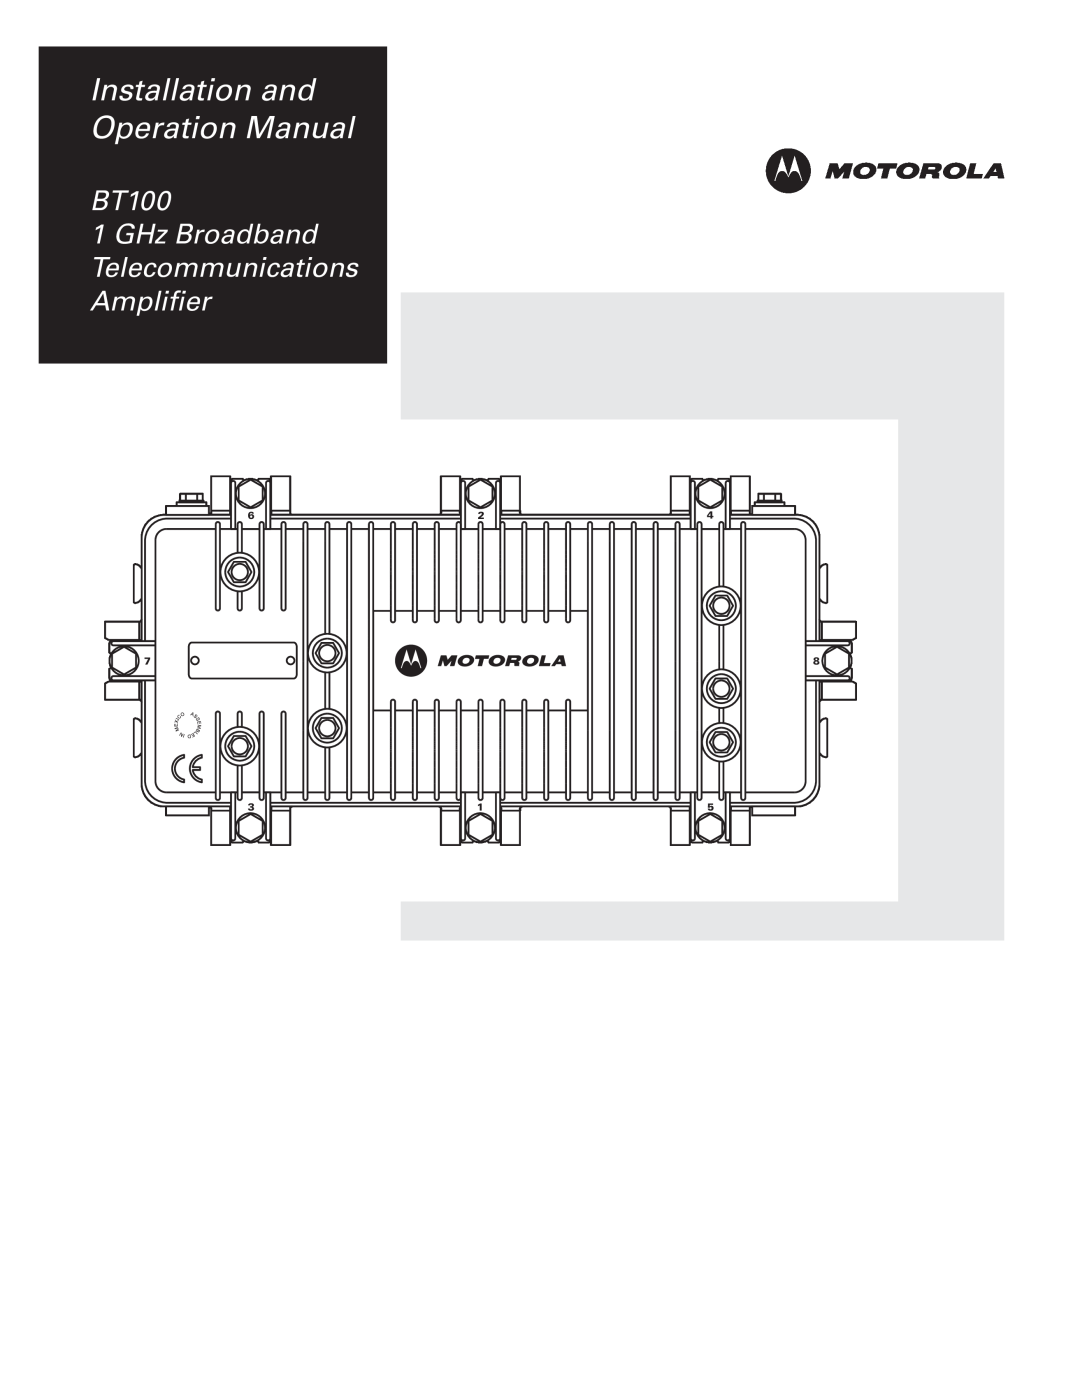 Motorola operation manual BT100 1 GHz Broadband Telecommunications, Amplifier 